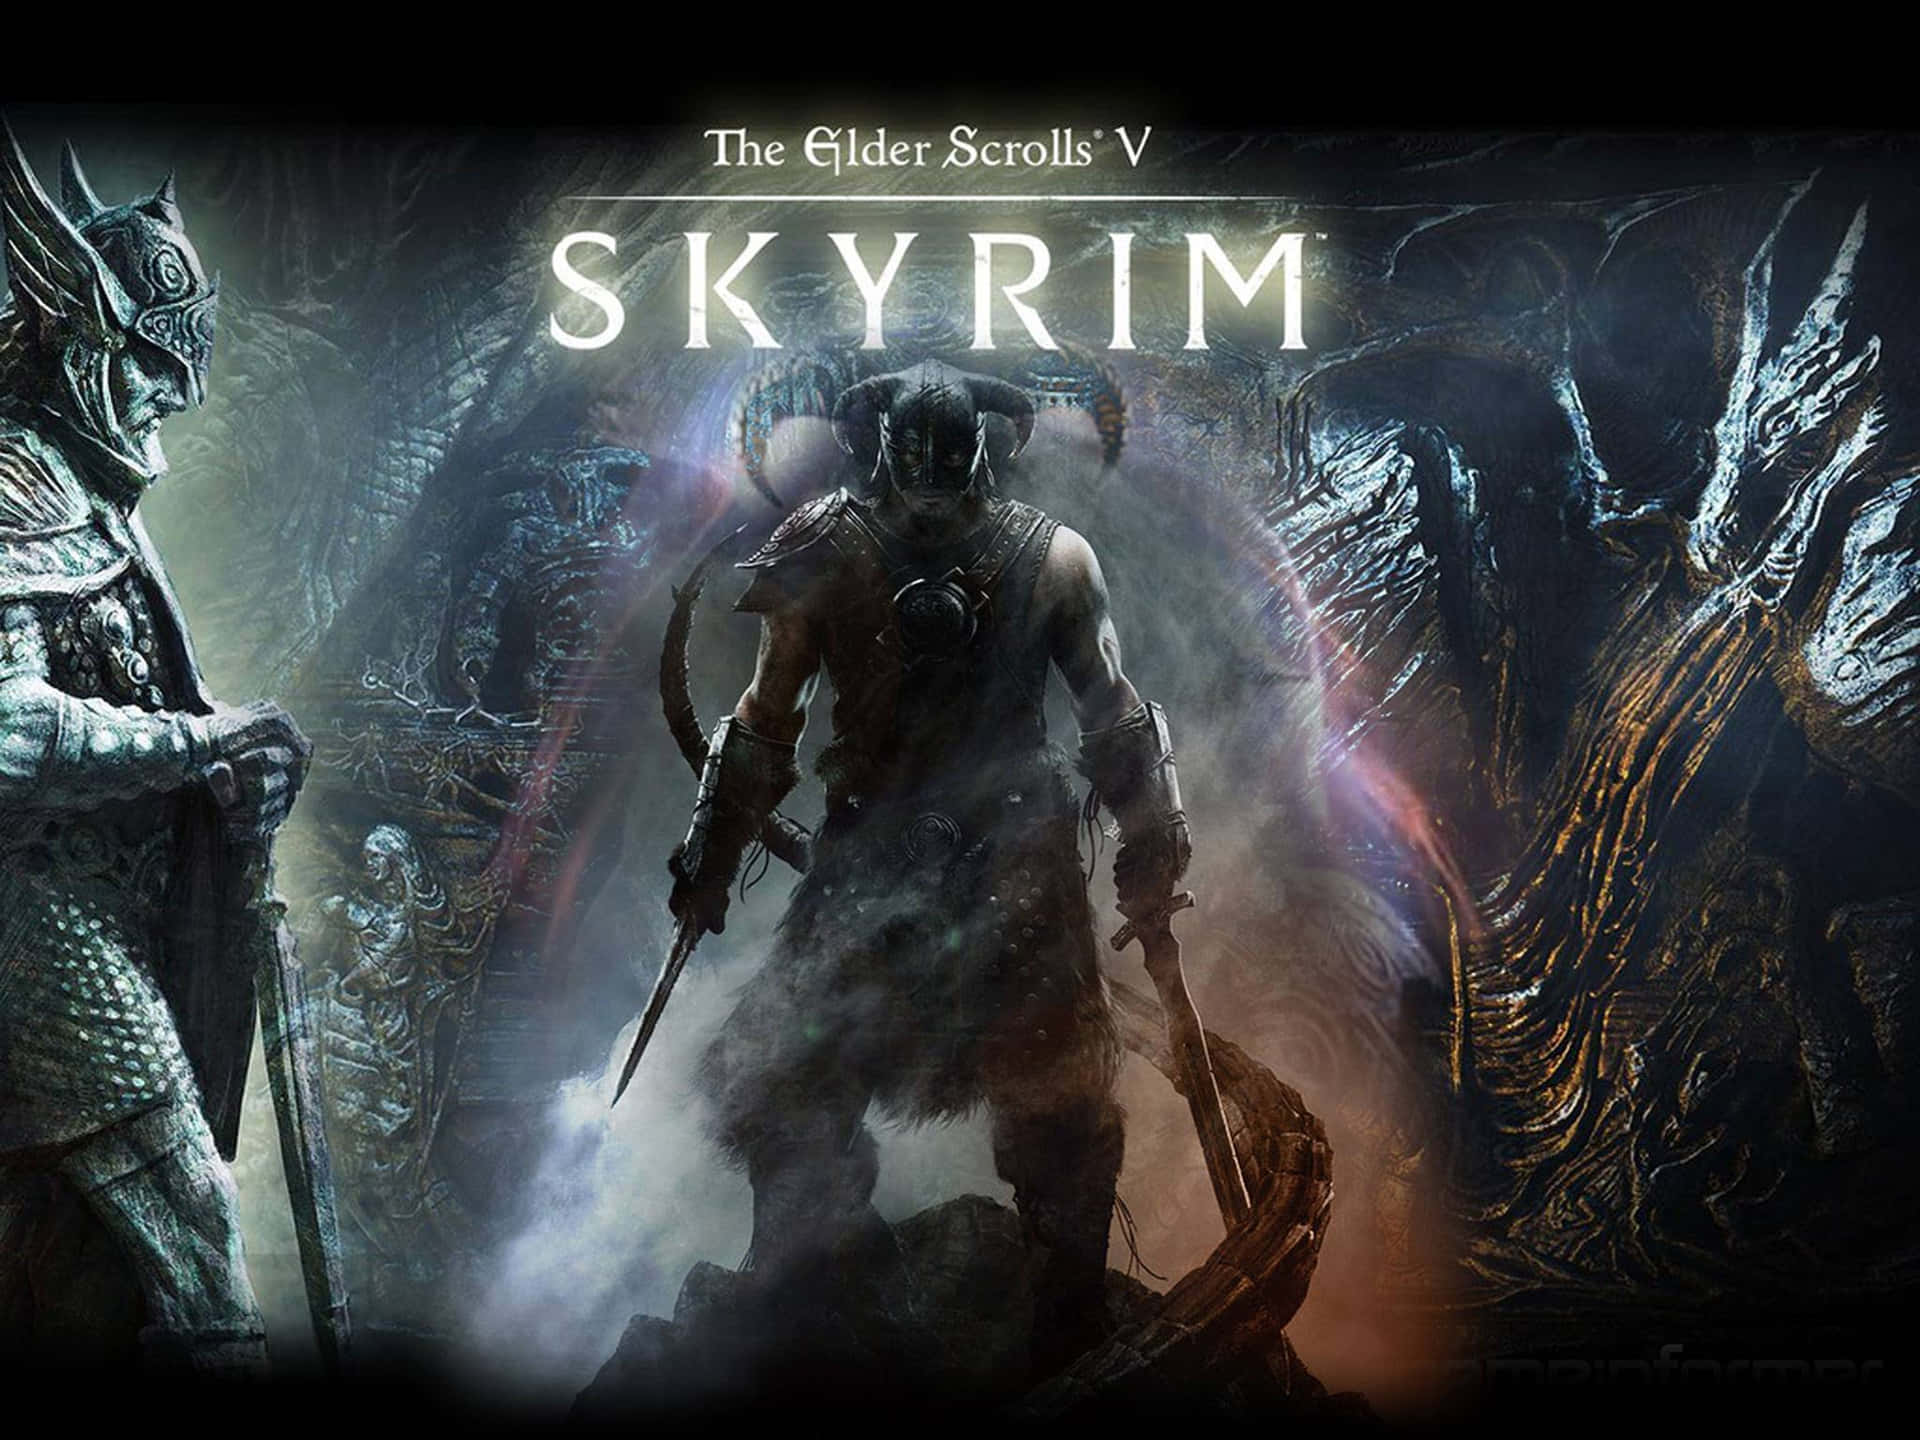 The Elder Scrolls V: Skyrim - Breathtaking Landscape